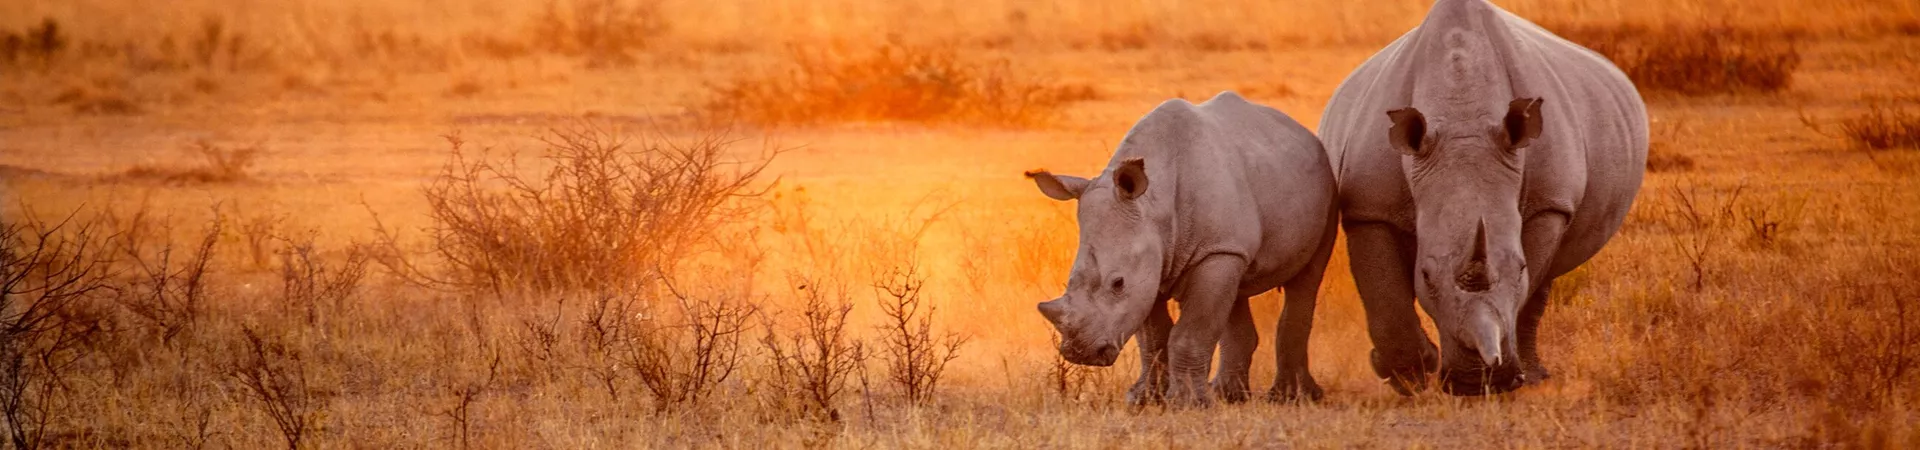 Rhinos on Safari holiday